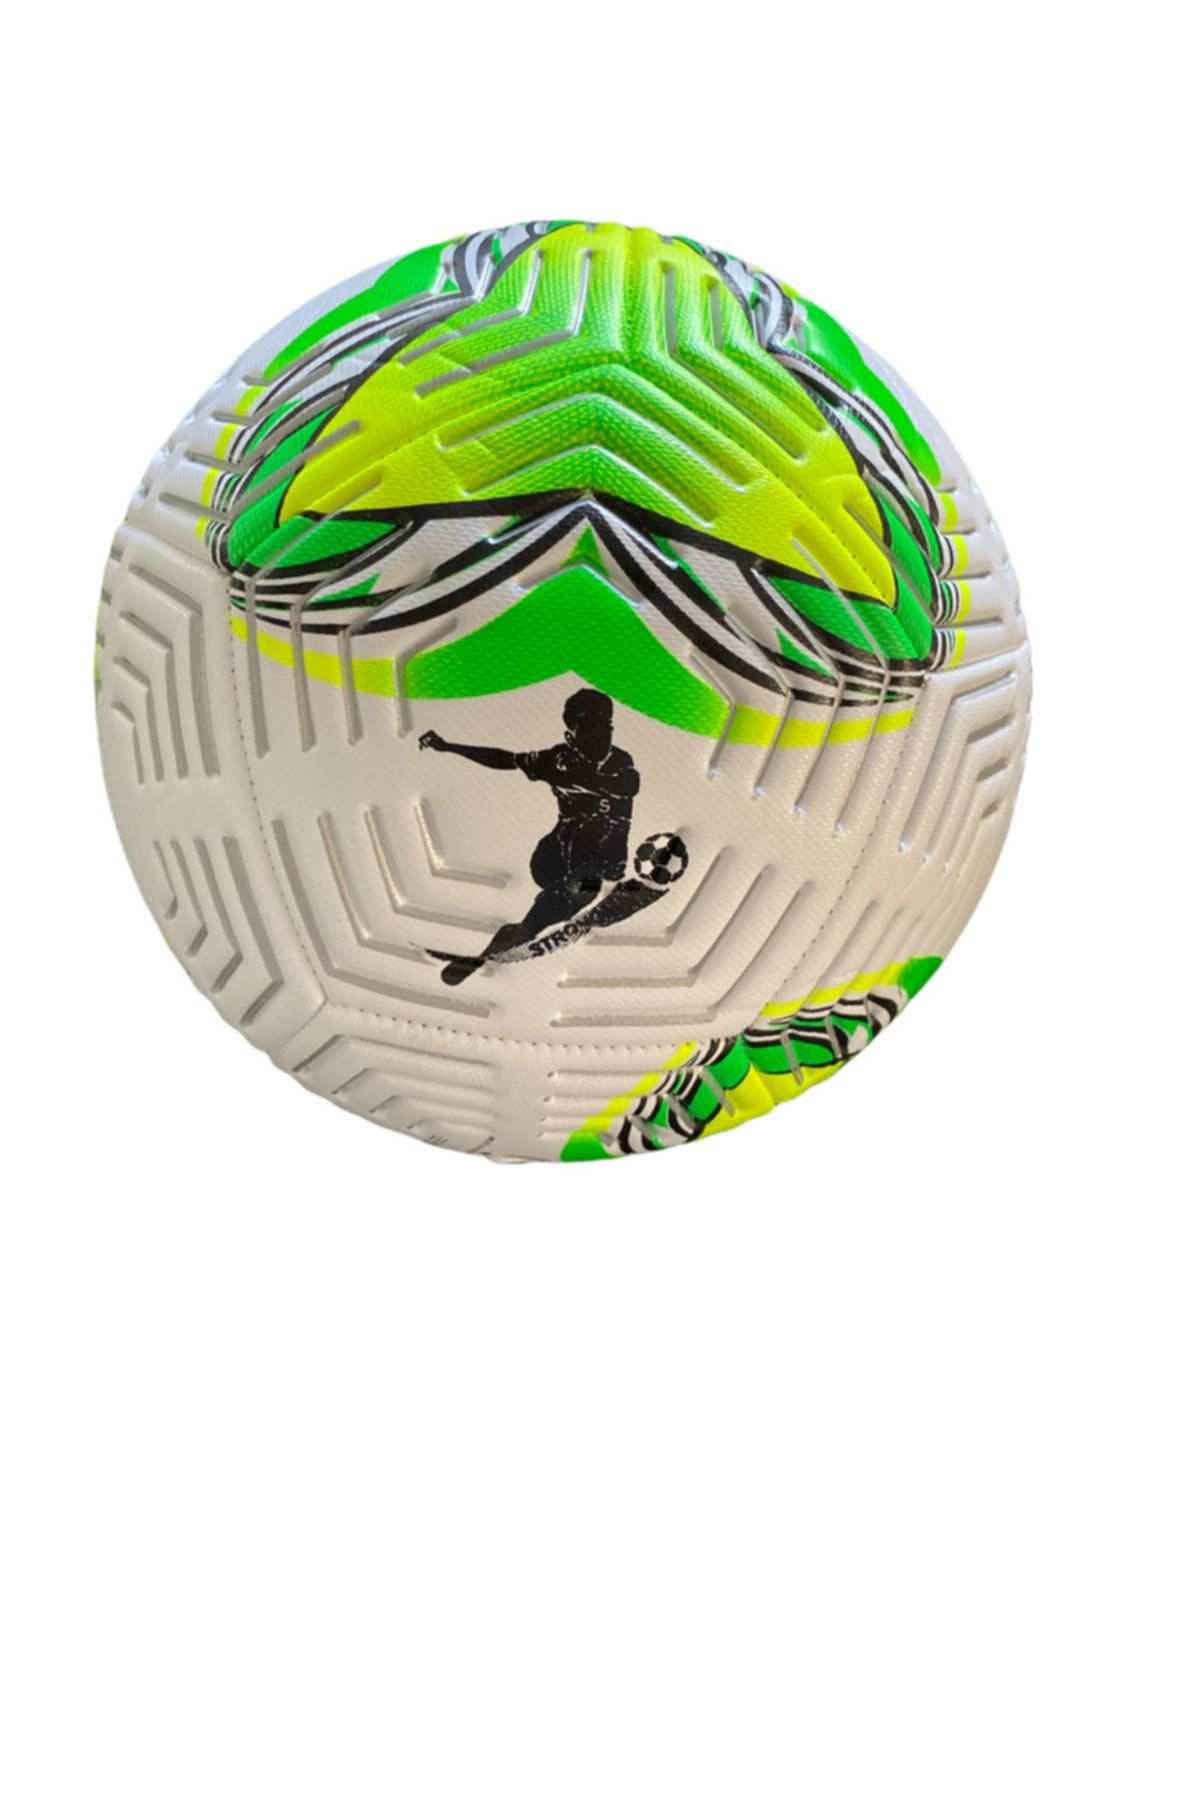 Muba 4 Astarlı Sert Zemin Futbol Topu Halı Saha Topu Maç Topu